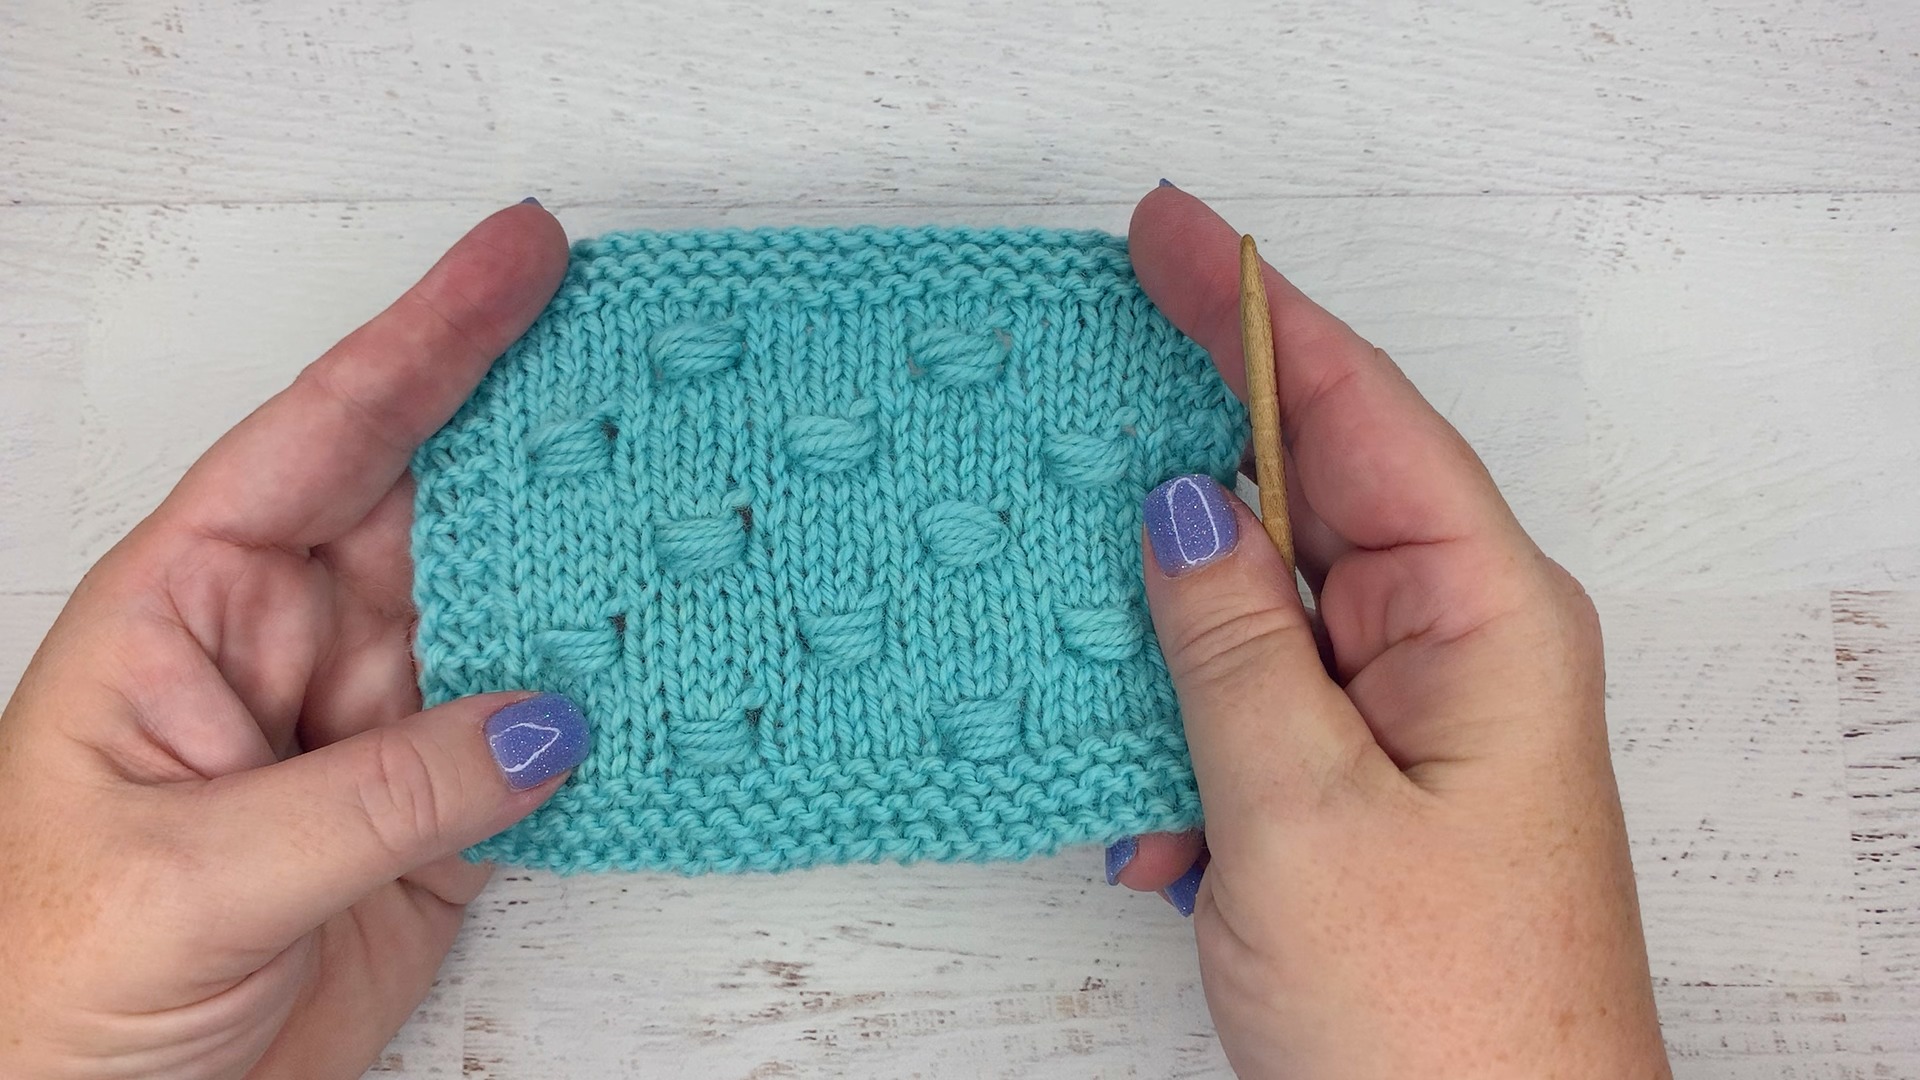 Using Two Circular Needles for Knitting Socks